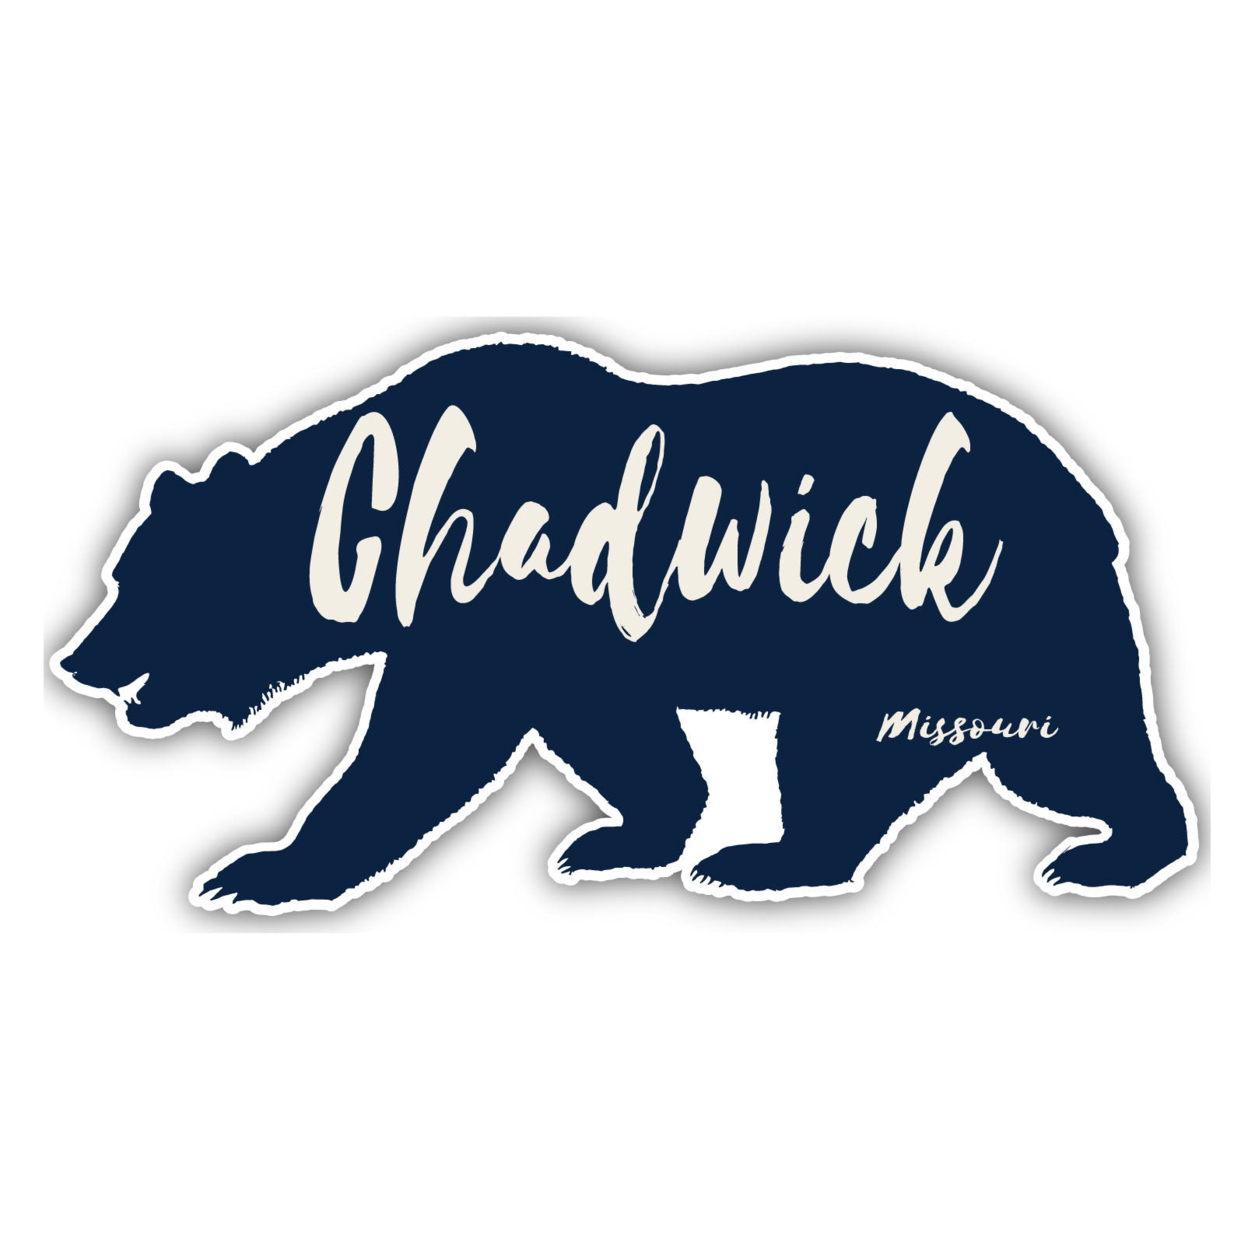 Chadwick Missouri Souvenir Decorative Stickers (Choose Theme And Size) - Single Unit, 8-Inch, Adventures Awaits